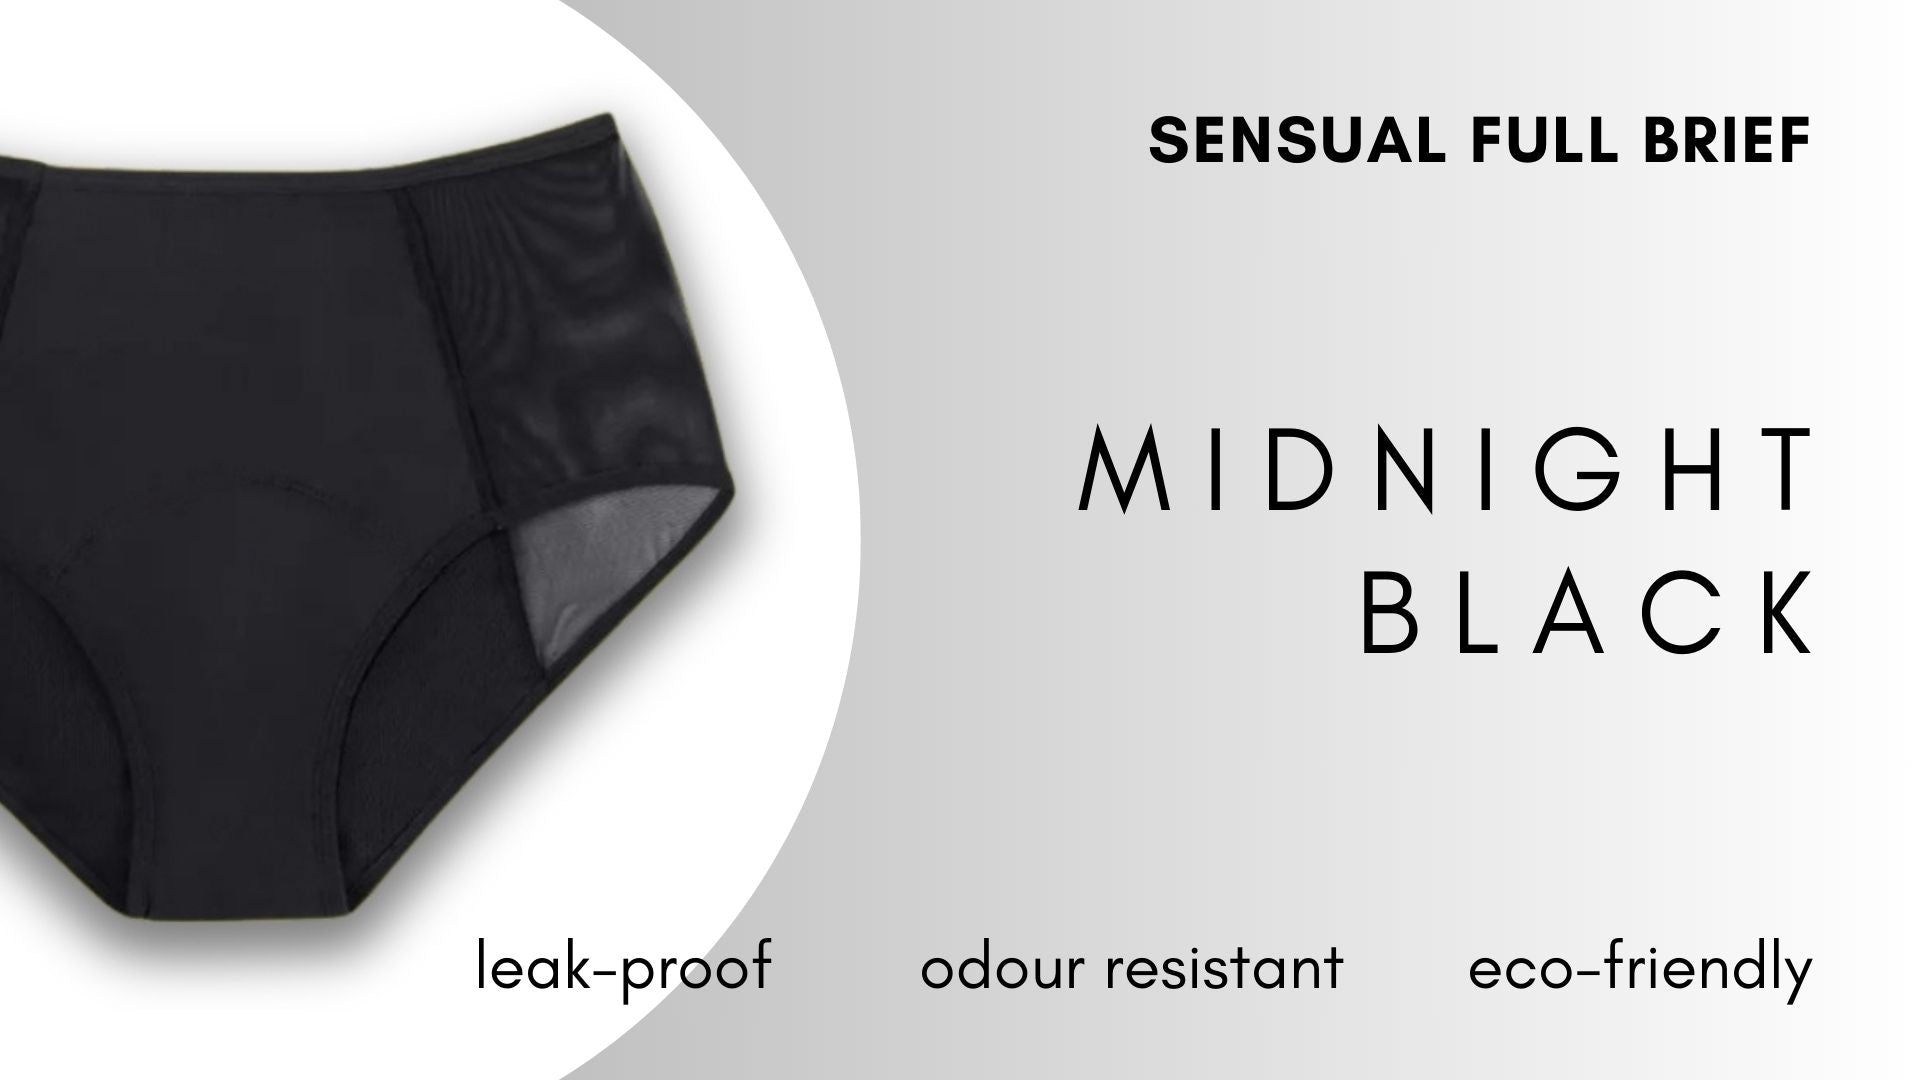 Sensual Full Brief - Midnight Black Period Underwear